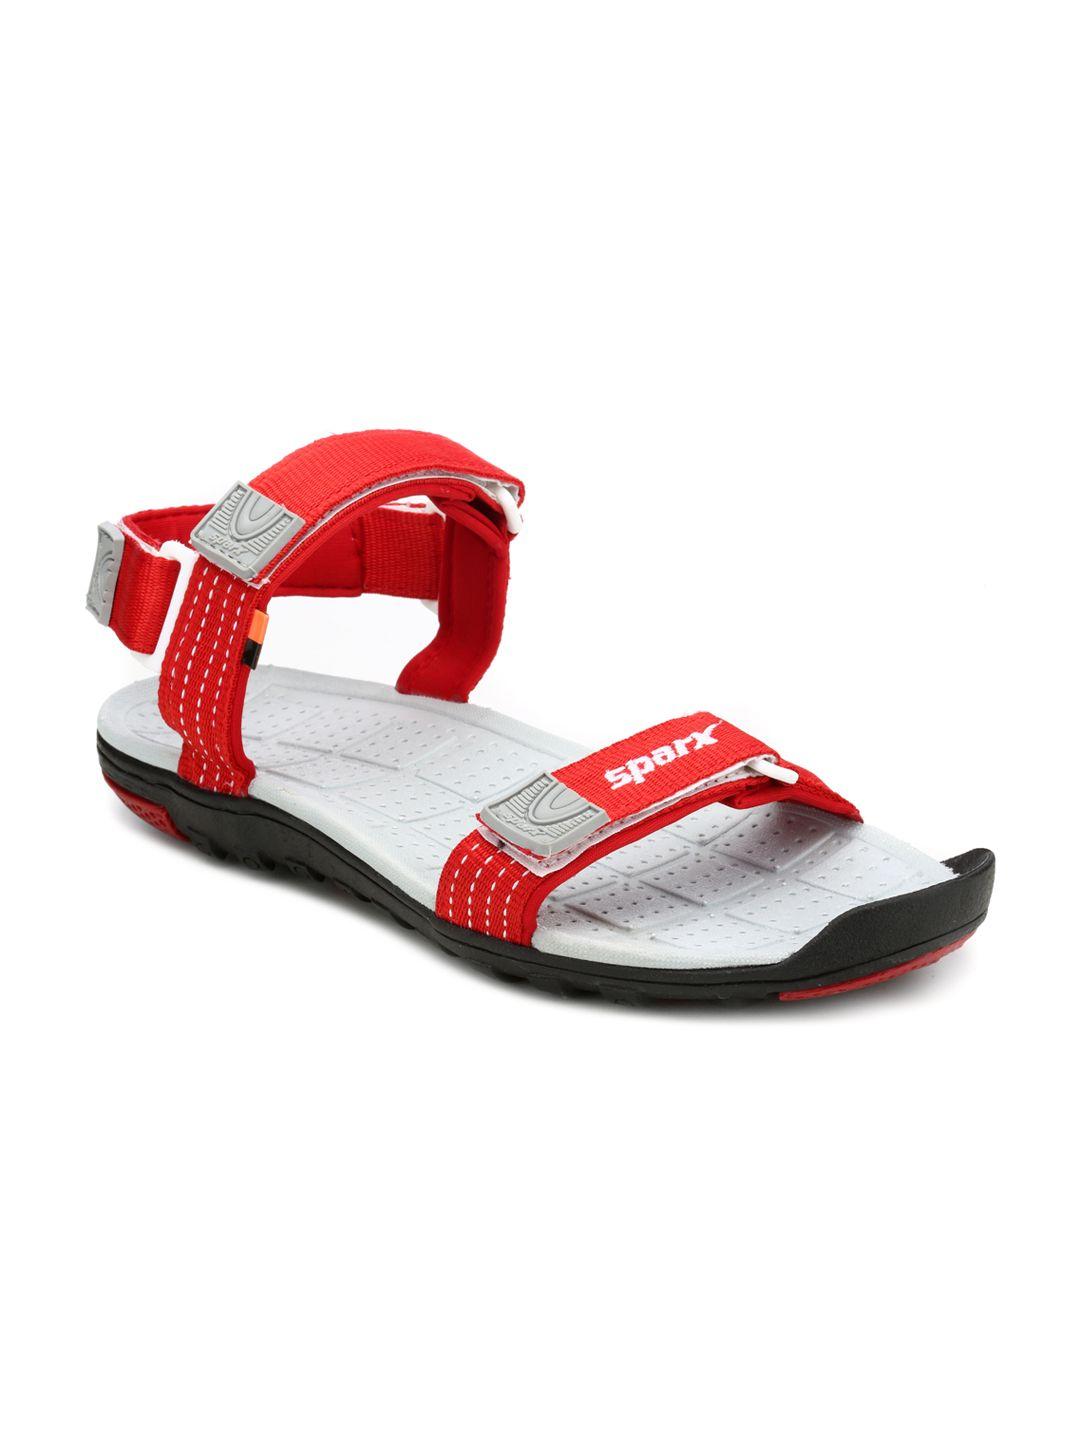 sparx women red & red comfort sandals